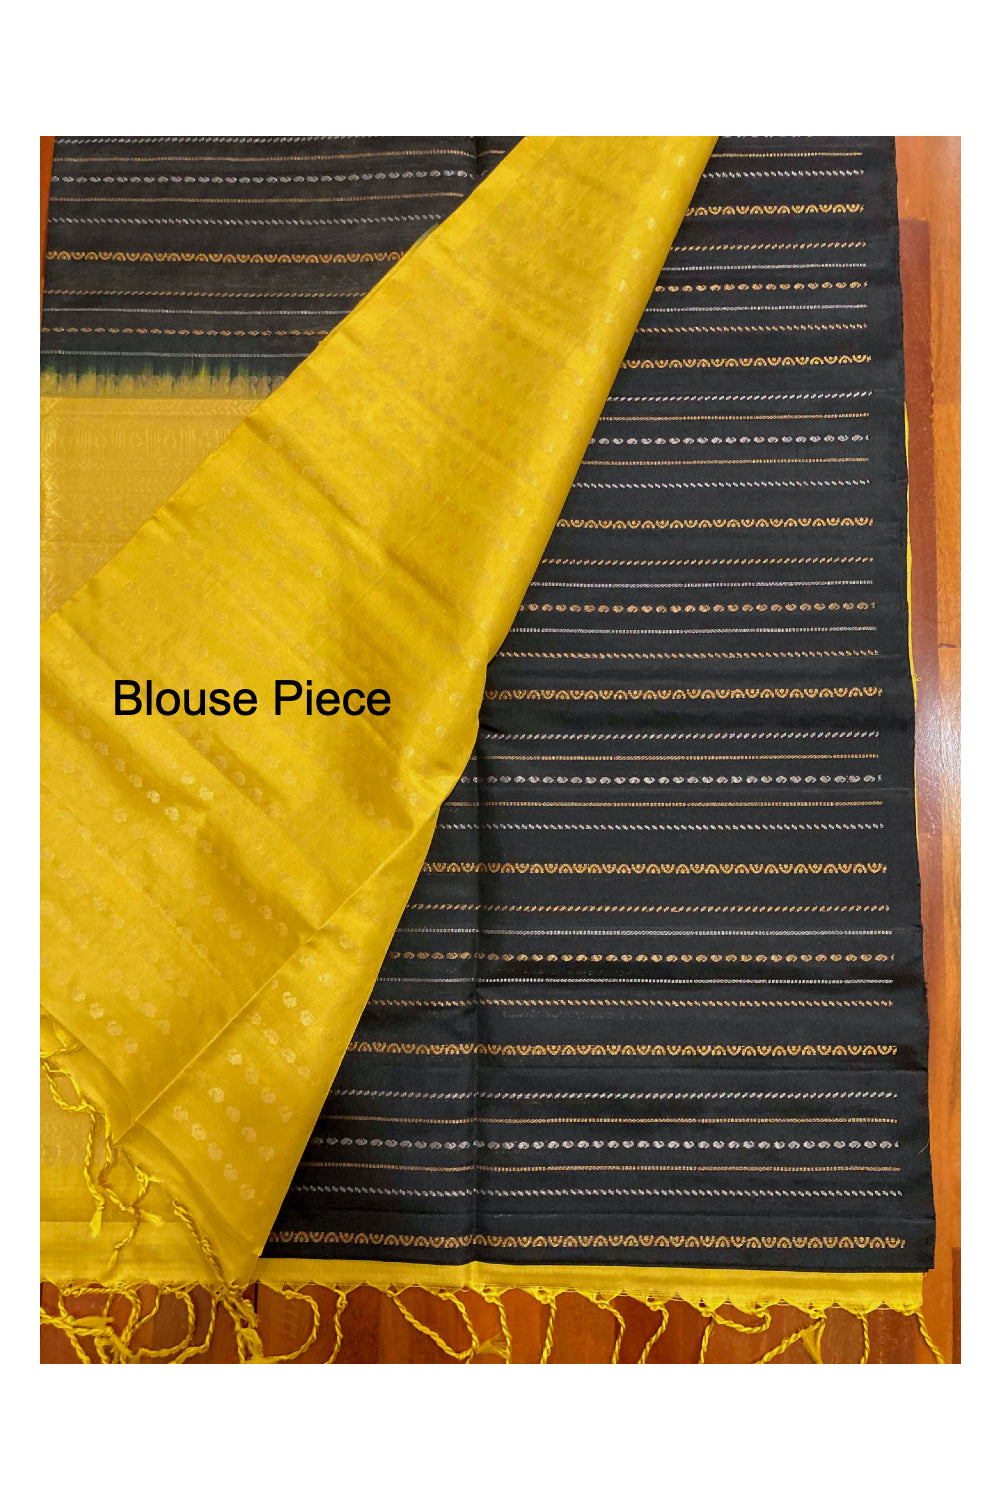 Southloom Handloom Pure Silk Kanchipuram Saree in Black Stripes and Yellow Pallu